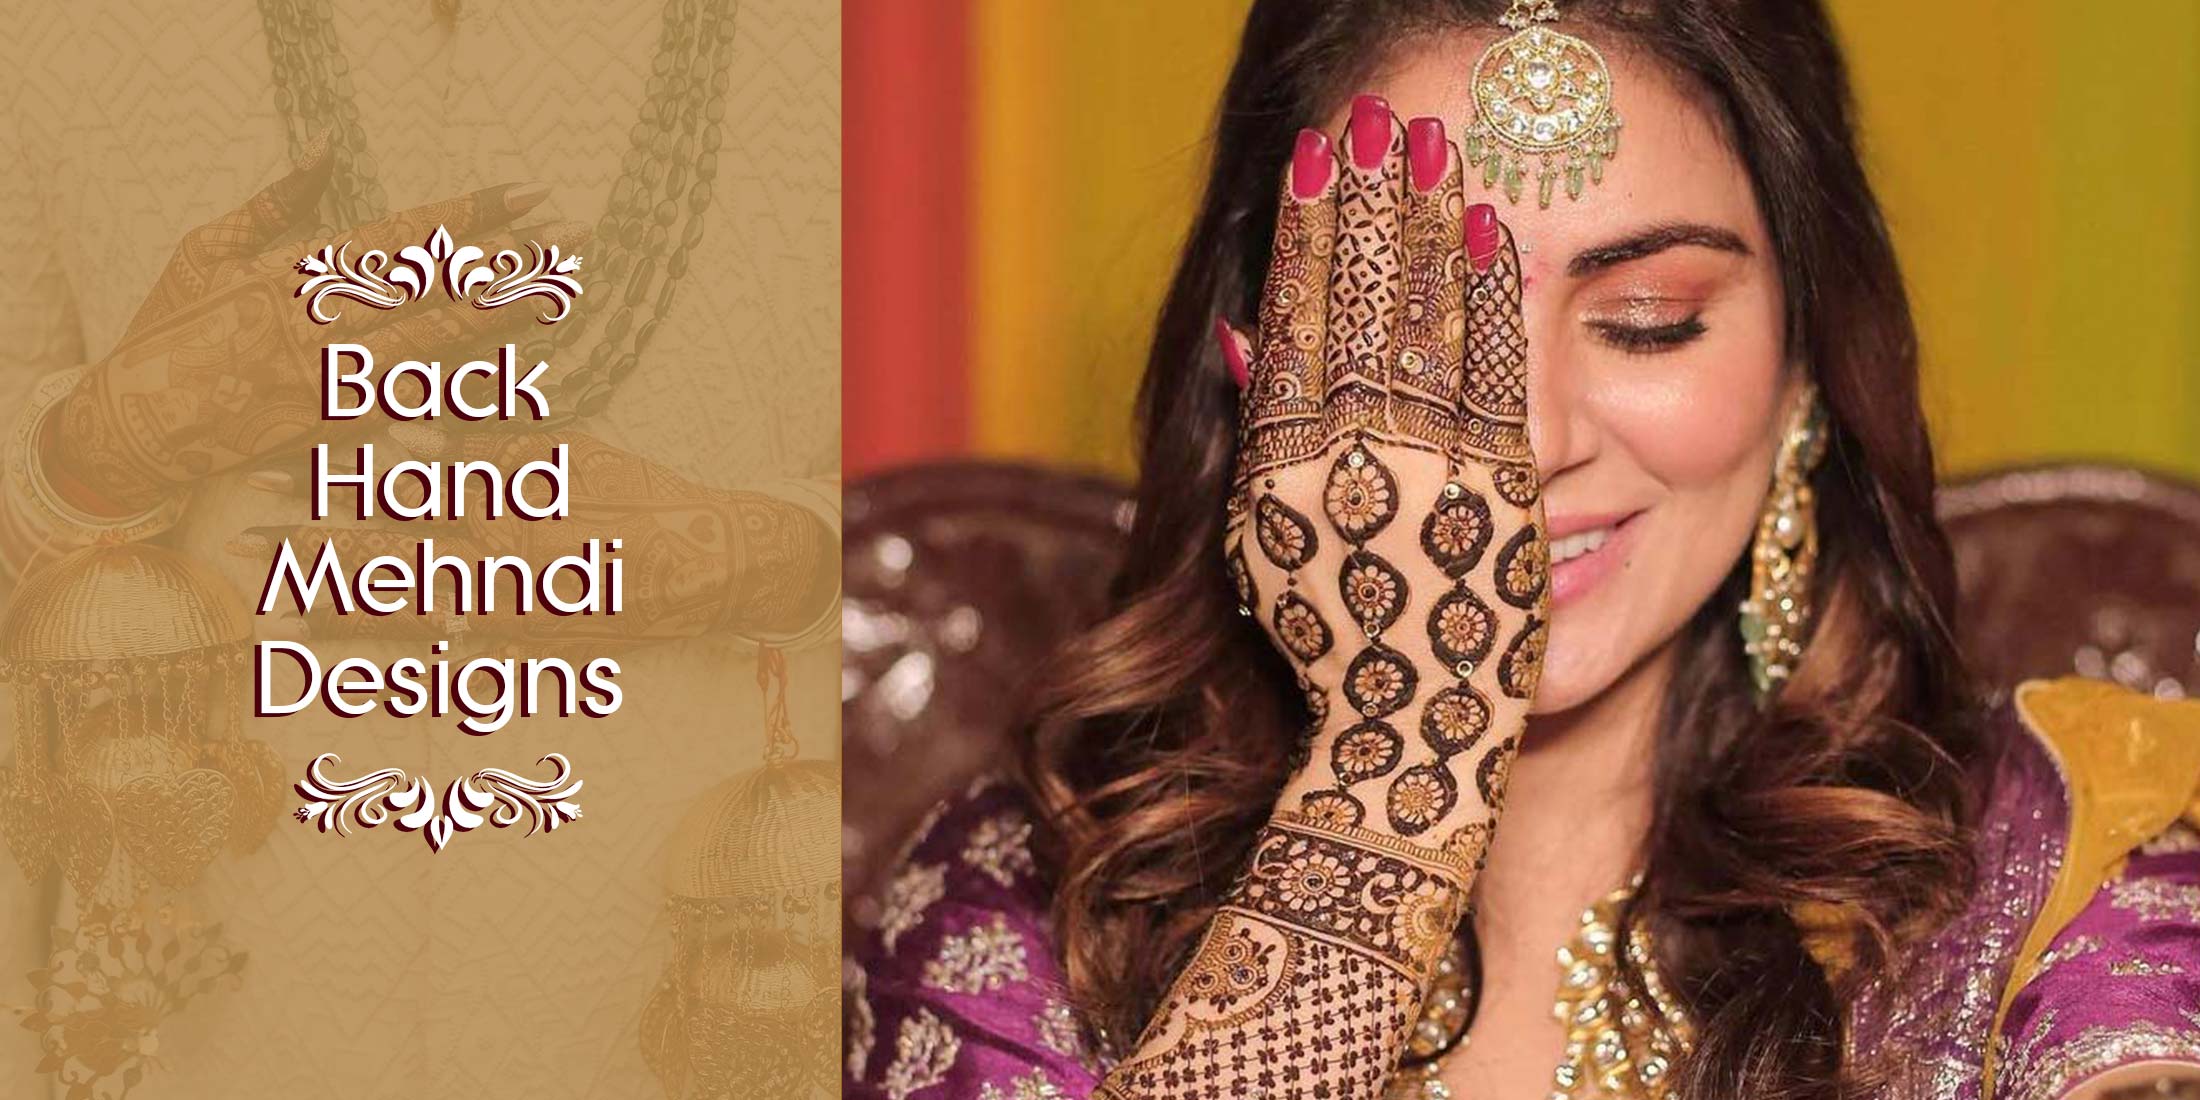 Bridal Mandala Mehndi Designs for Back Hand (2) - K4 Fashion